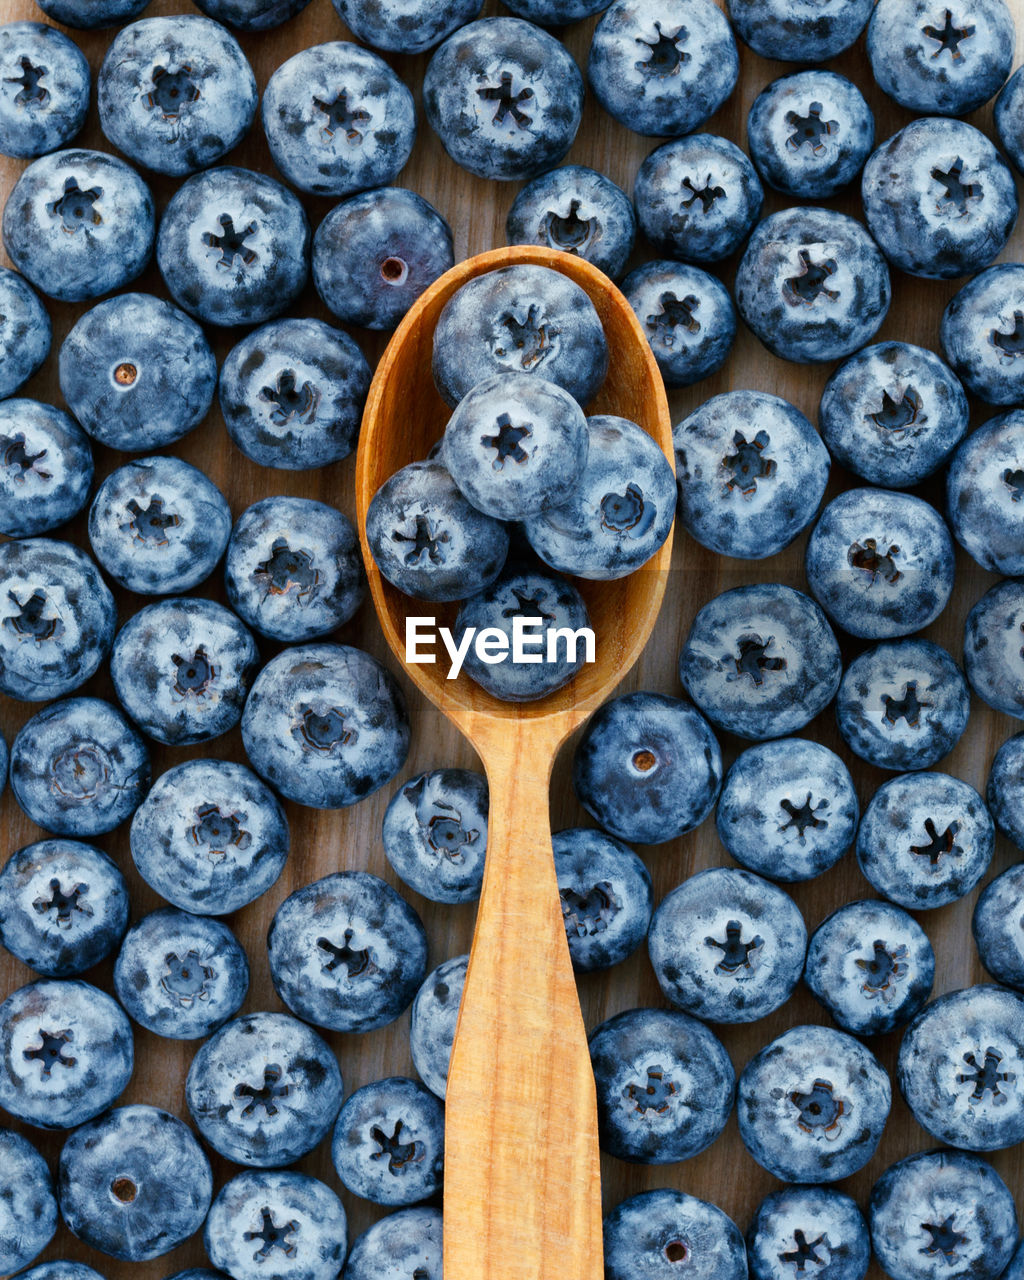 Fresh blue berries in a wooden spoon